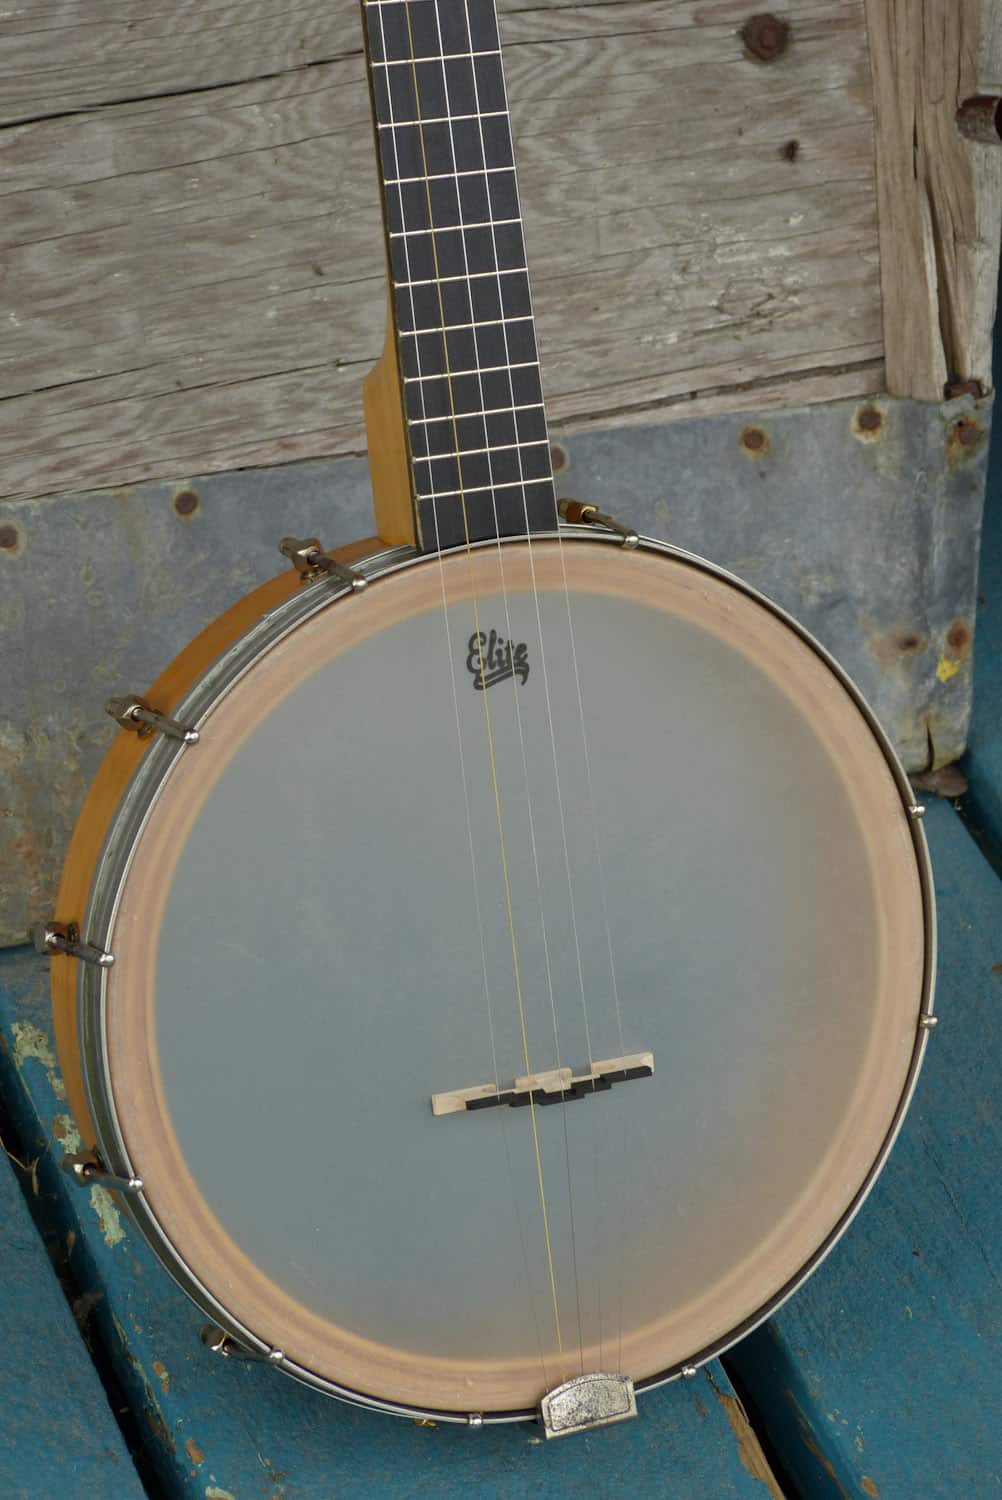 Modern Banjo